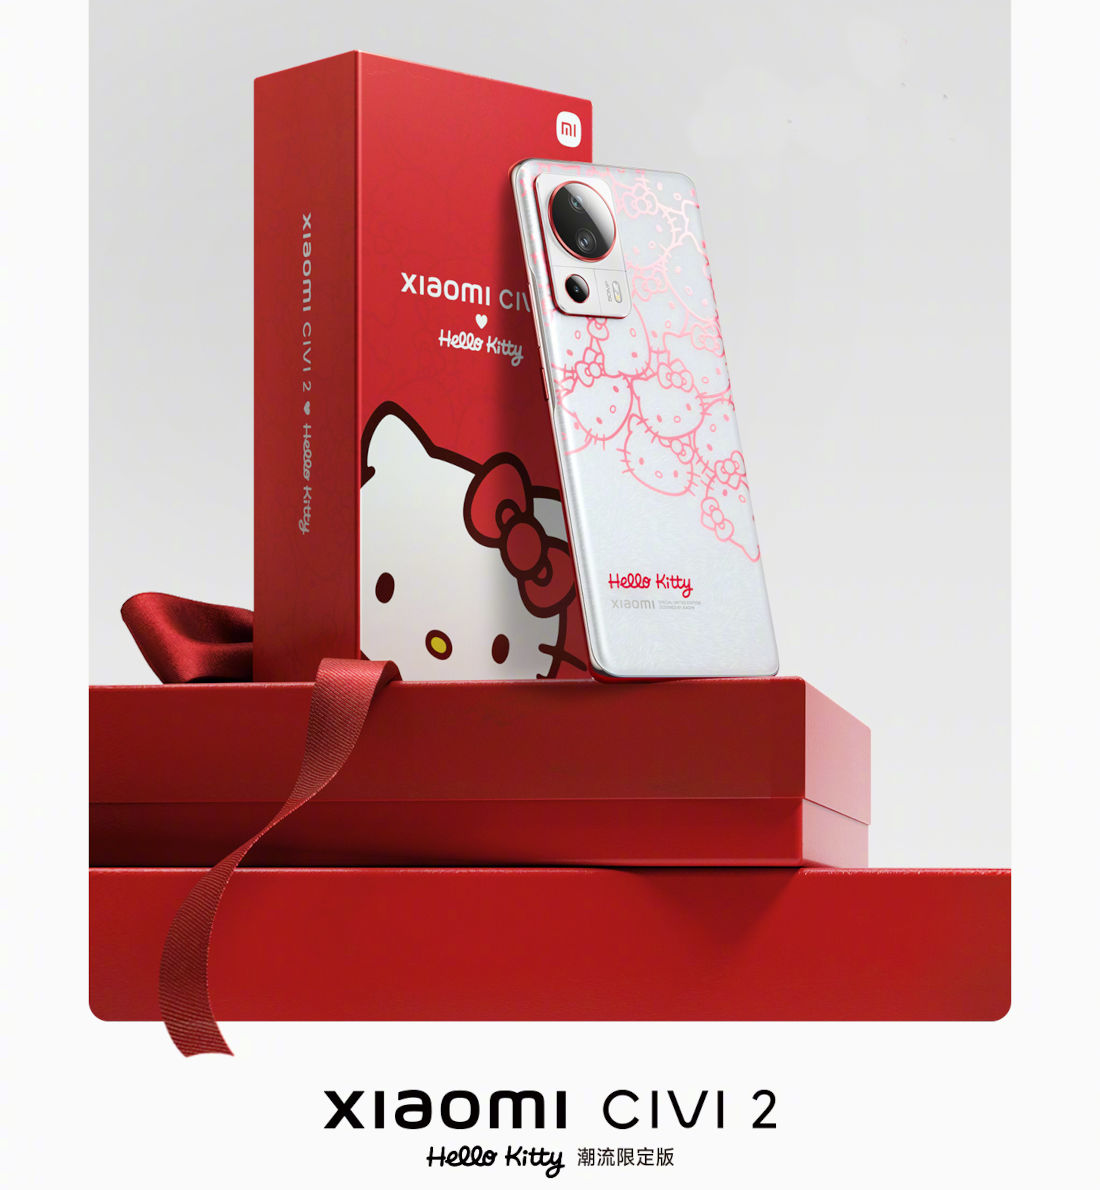 Xiaomi Civi 2 Hello Kitty Fashion Limited Edition announced